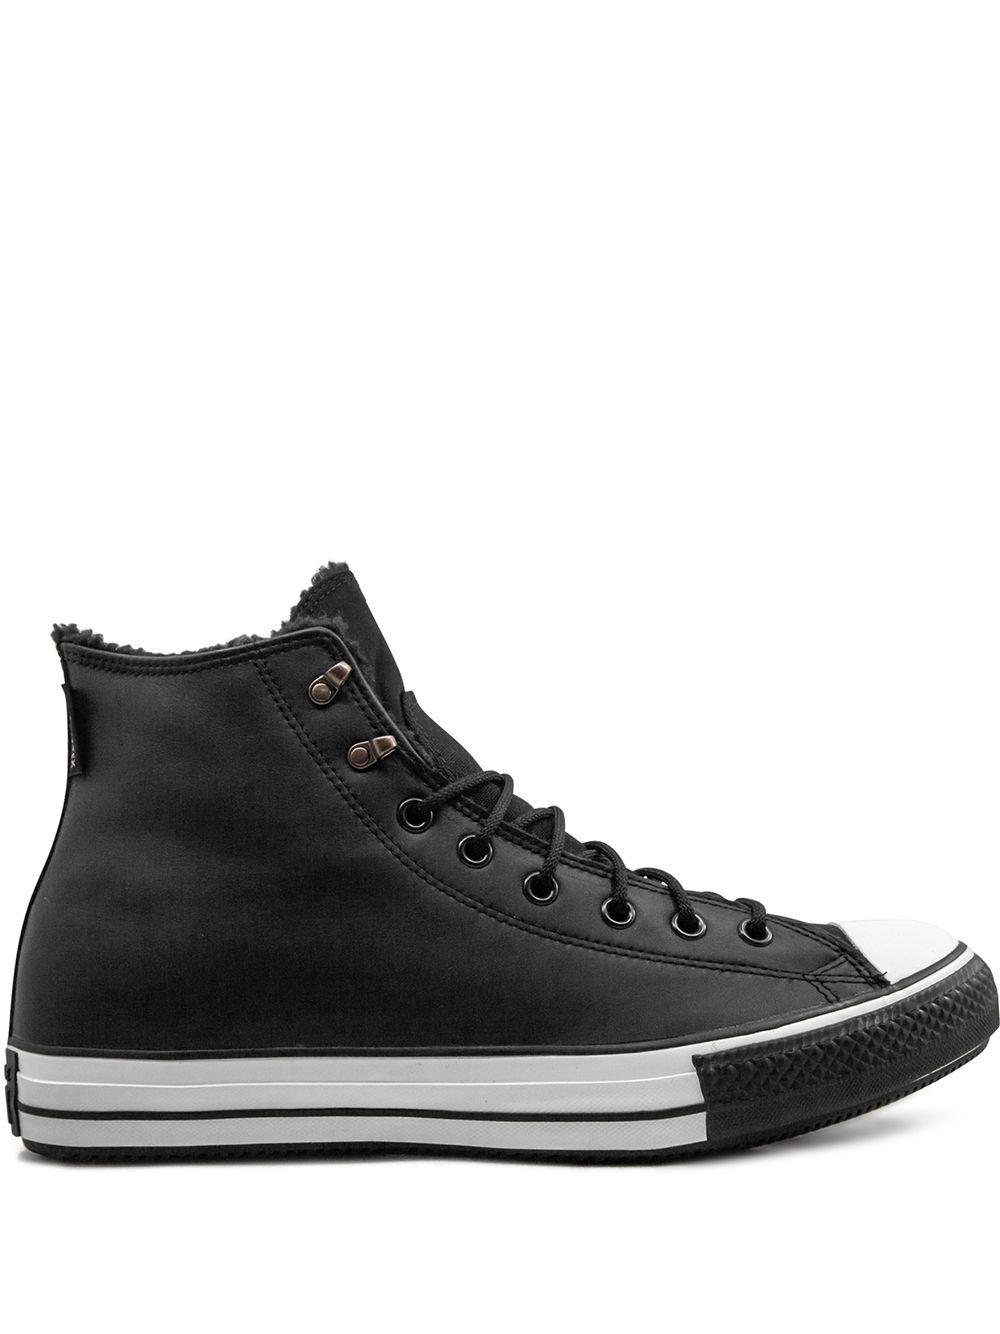 Converse Leather X Gore-tex Ctas Winter Hi Sneakers in Black for Men - Lyst